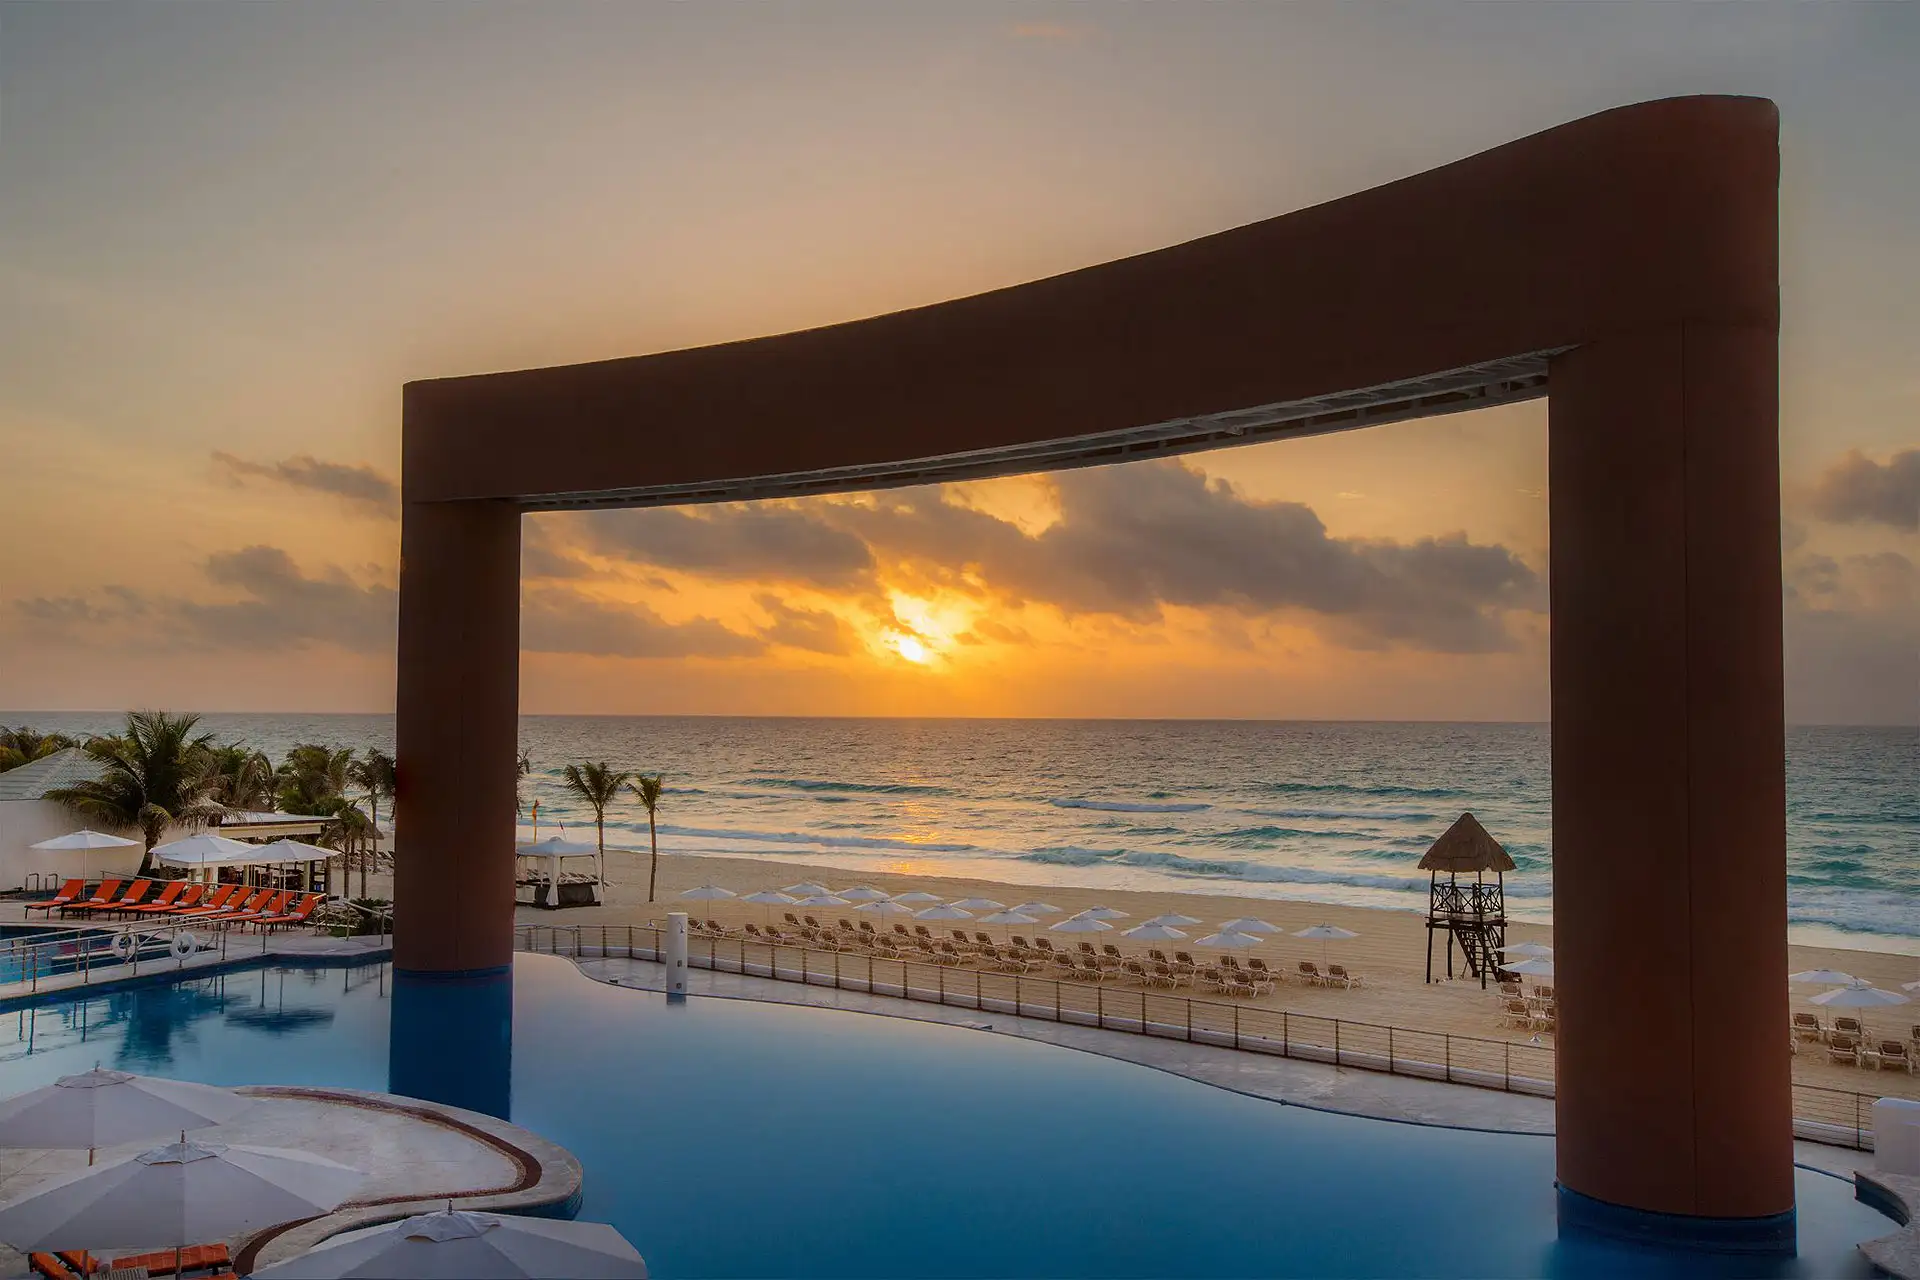 Beach Palace Cancun in Cancun, Mexico